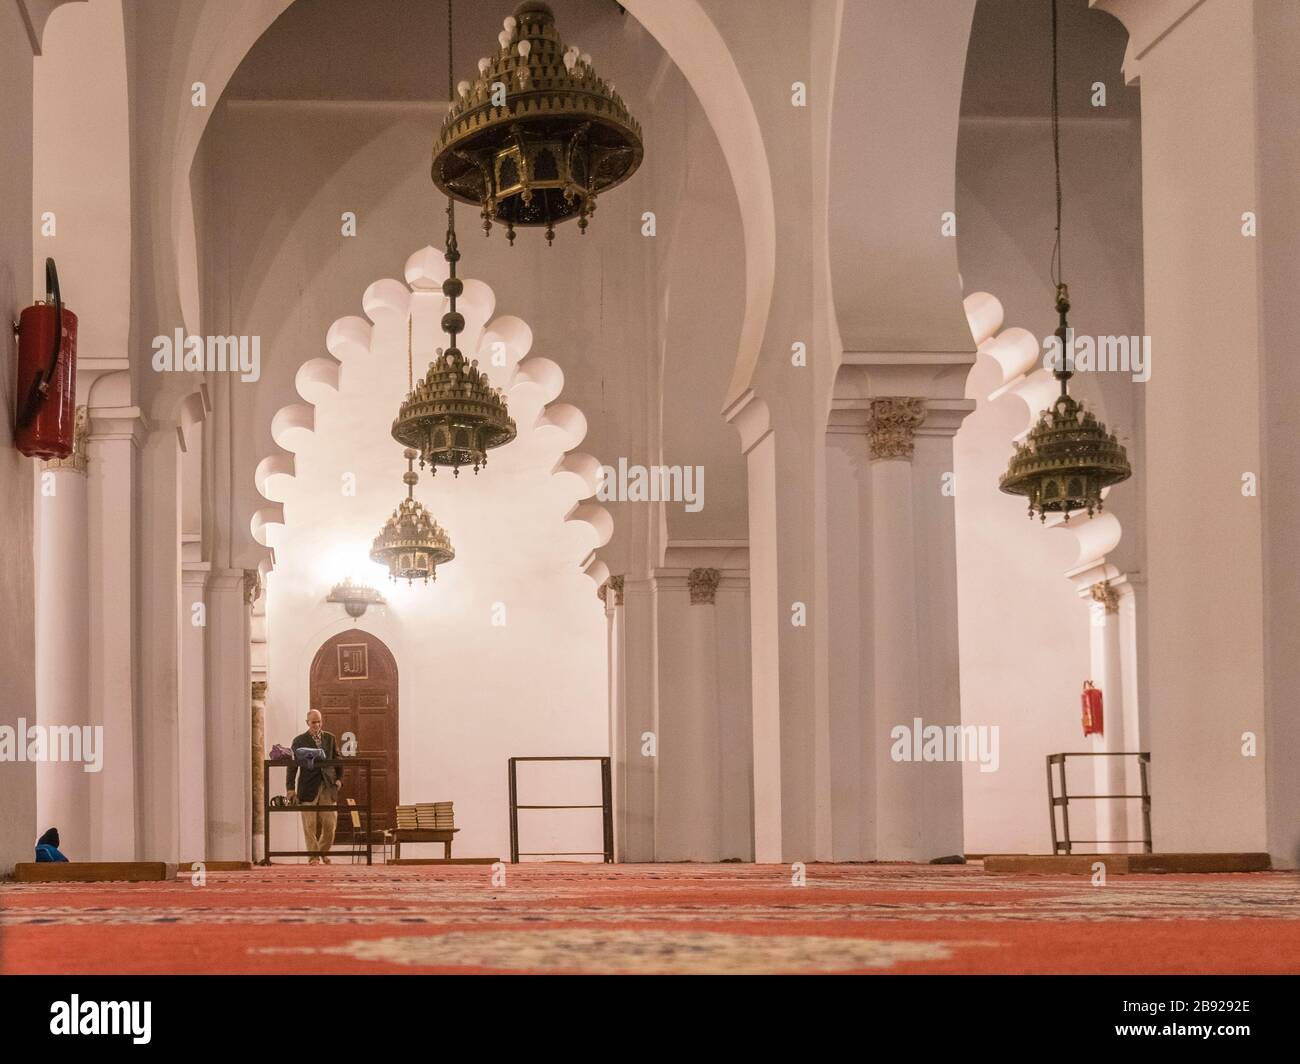 Koutoubia mosque interior with white pillars and decoration Stock Photo